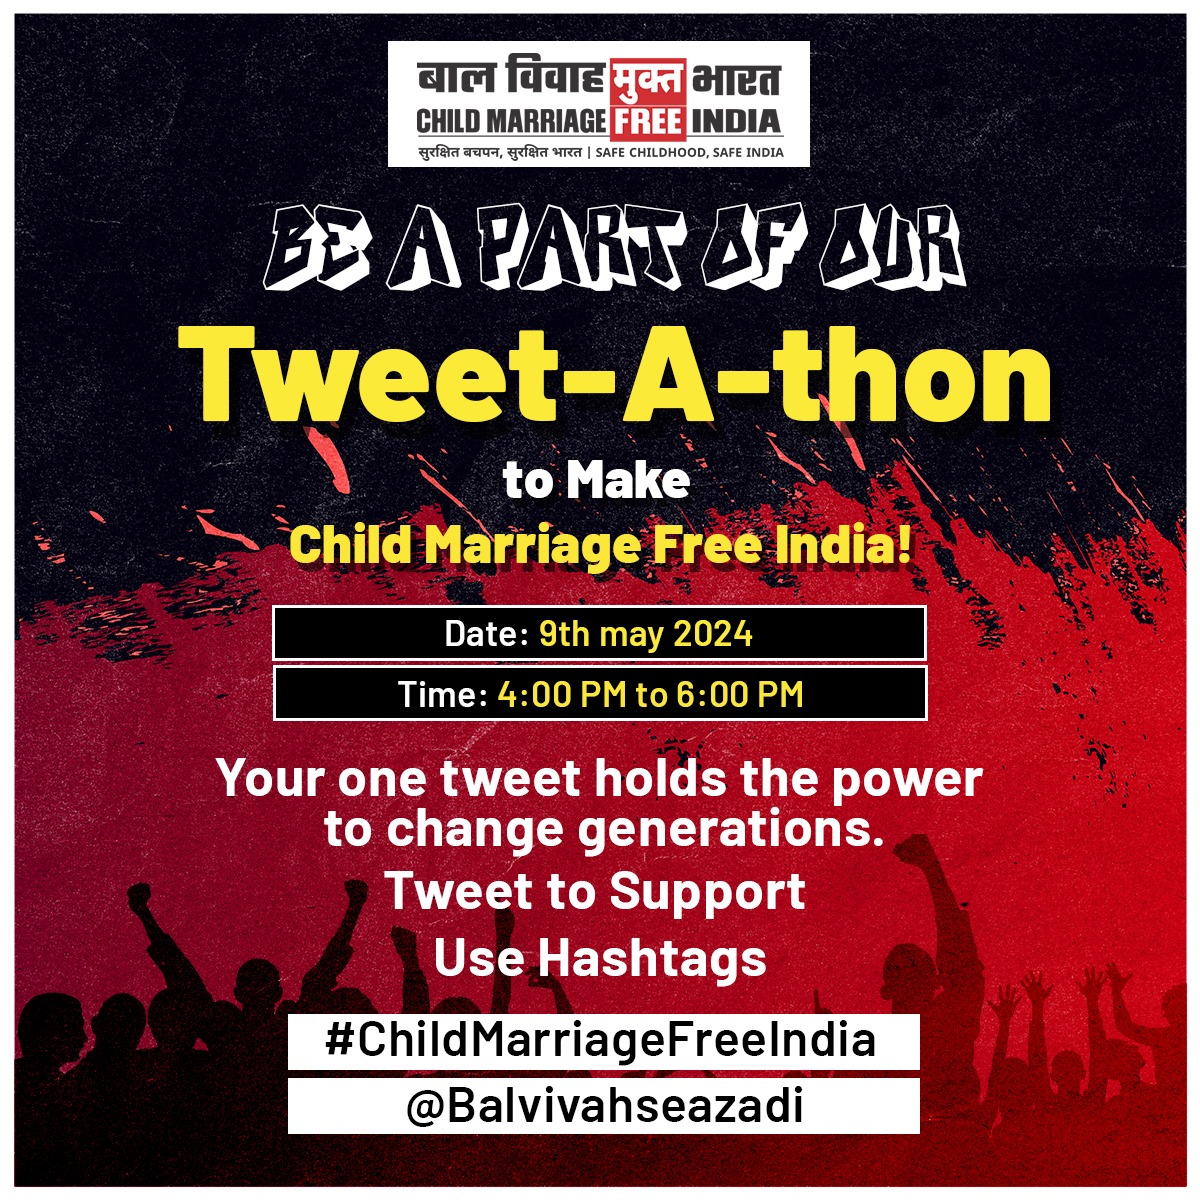 Let's Child Marriage Free India.

#Balvivahseazadi
#ChildMairraigeFreeIndia